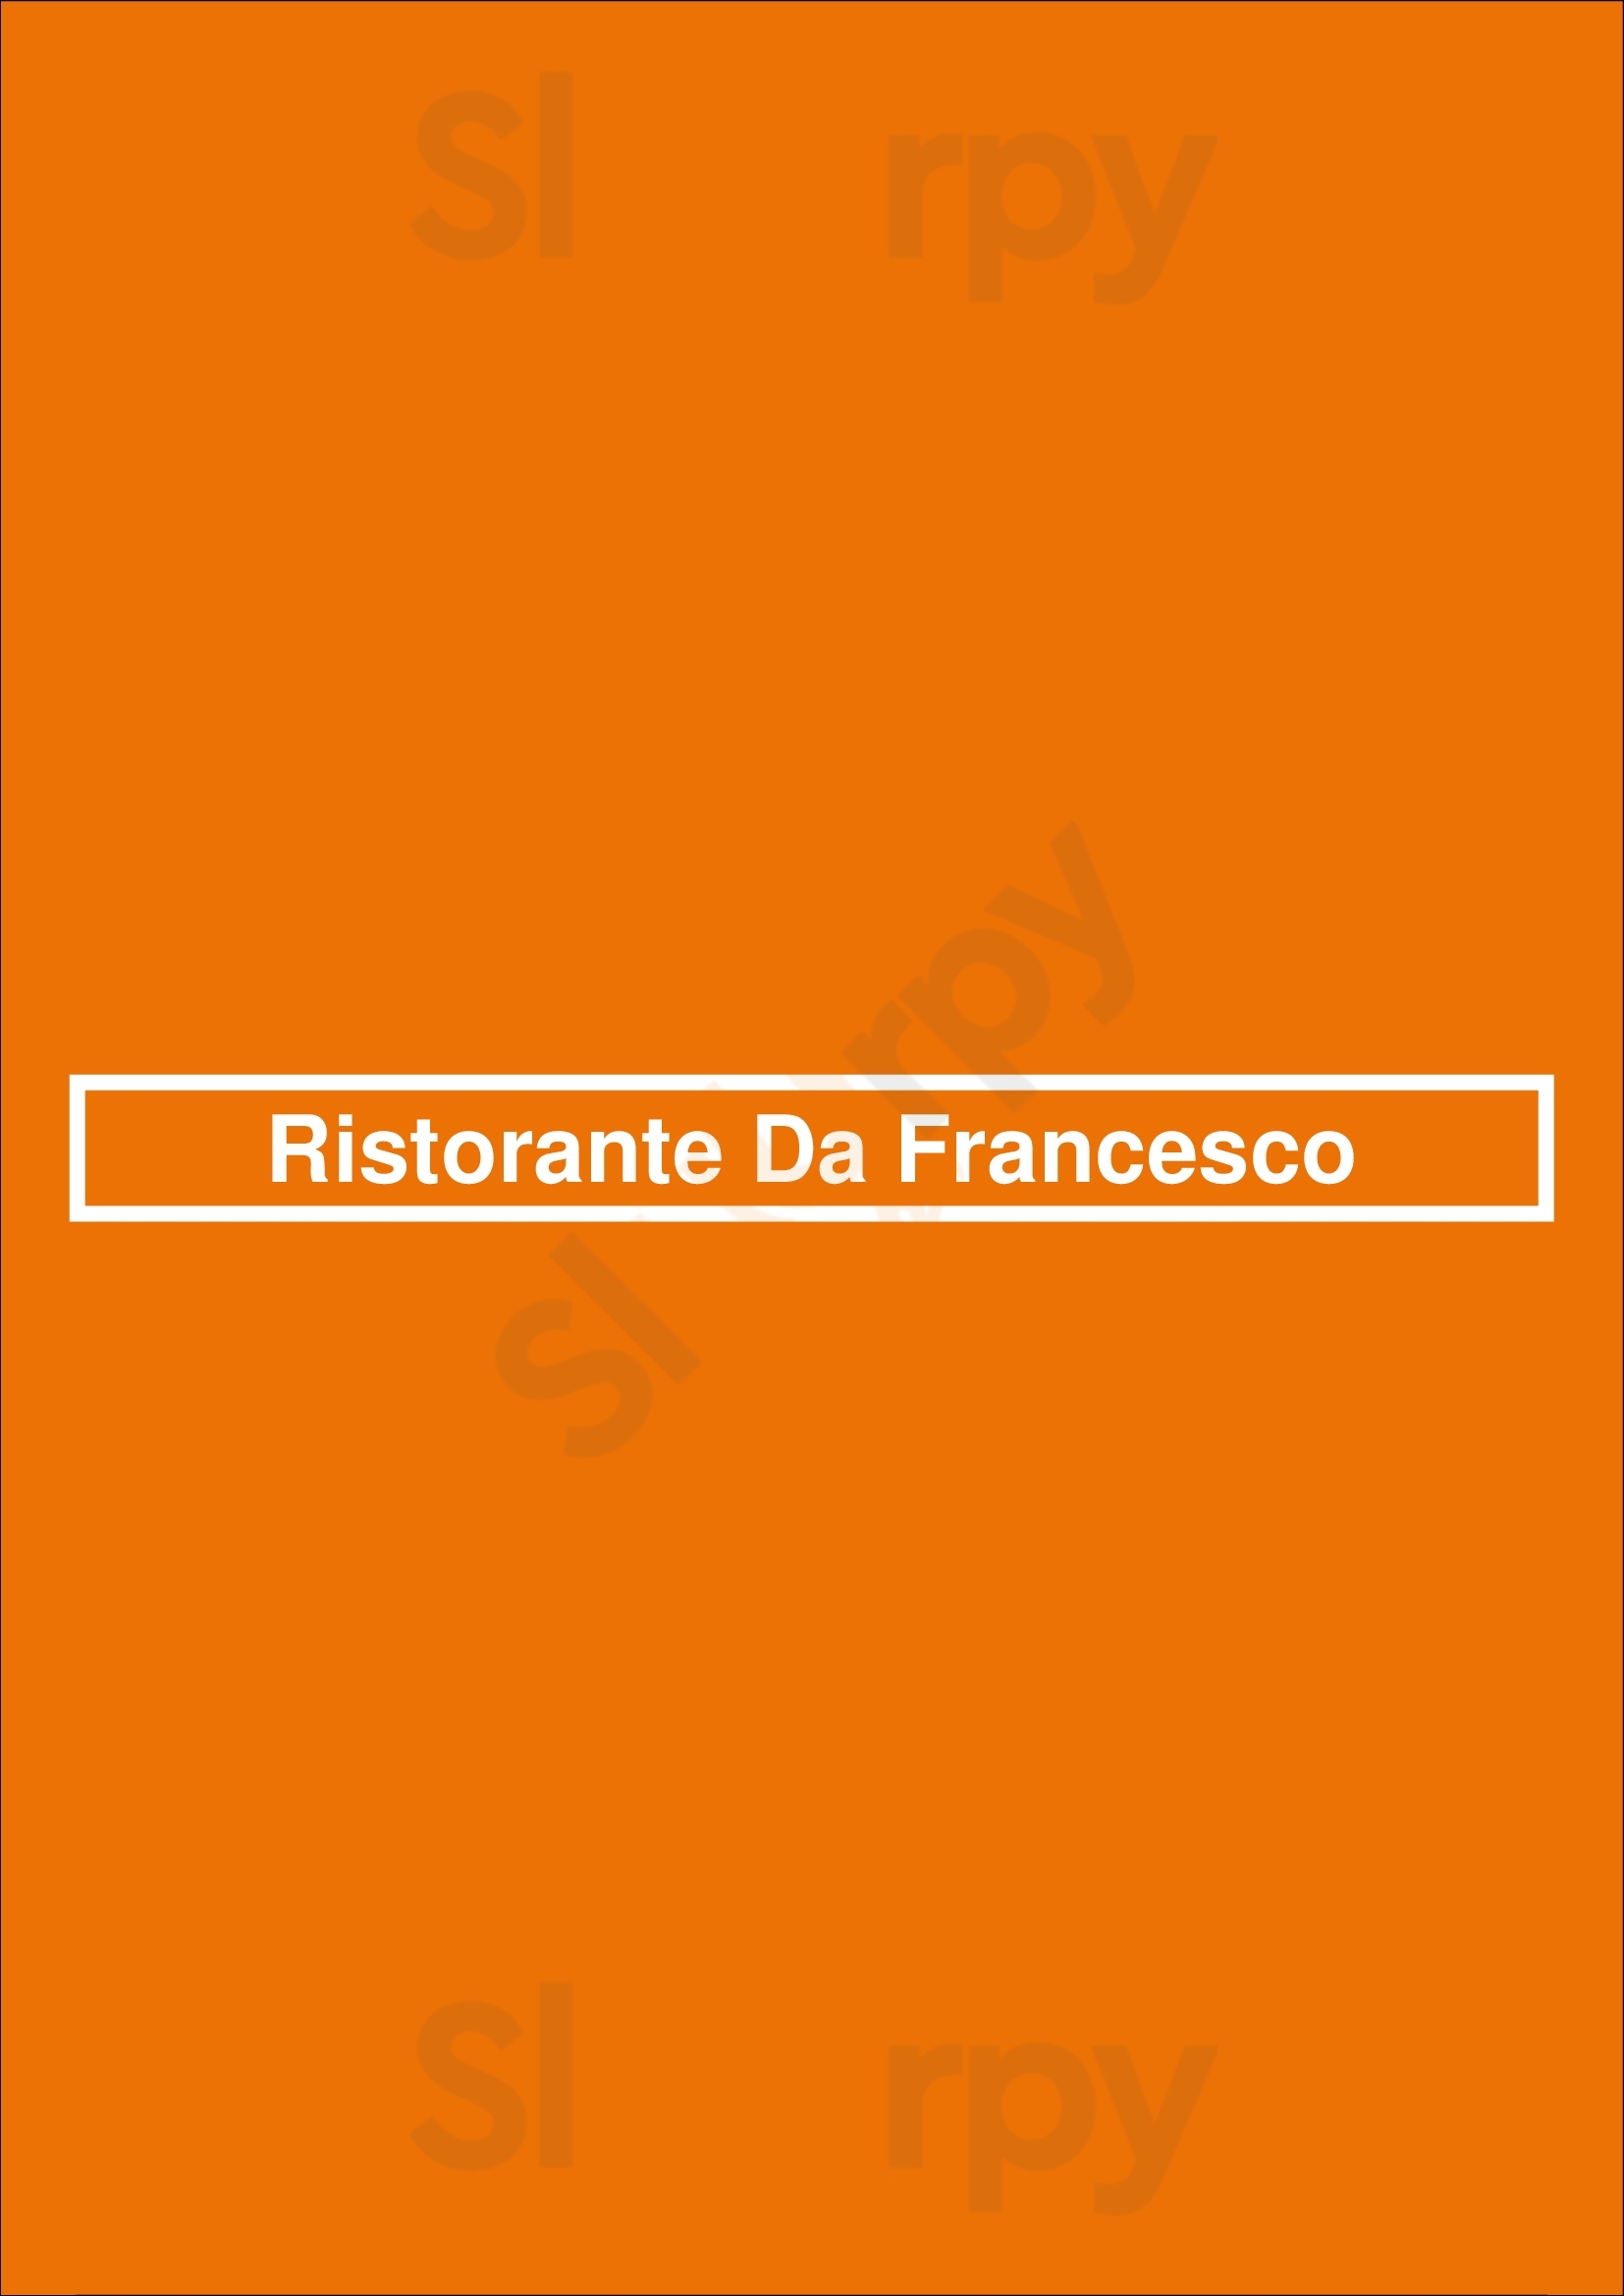 Ristorante Da Francesco Ismaning Menu - 1